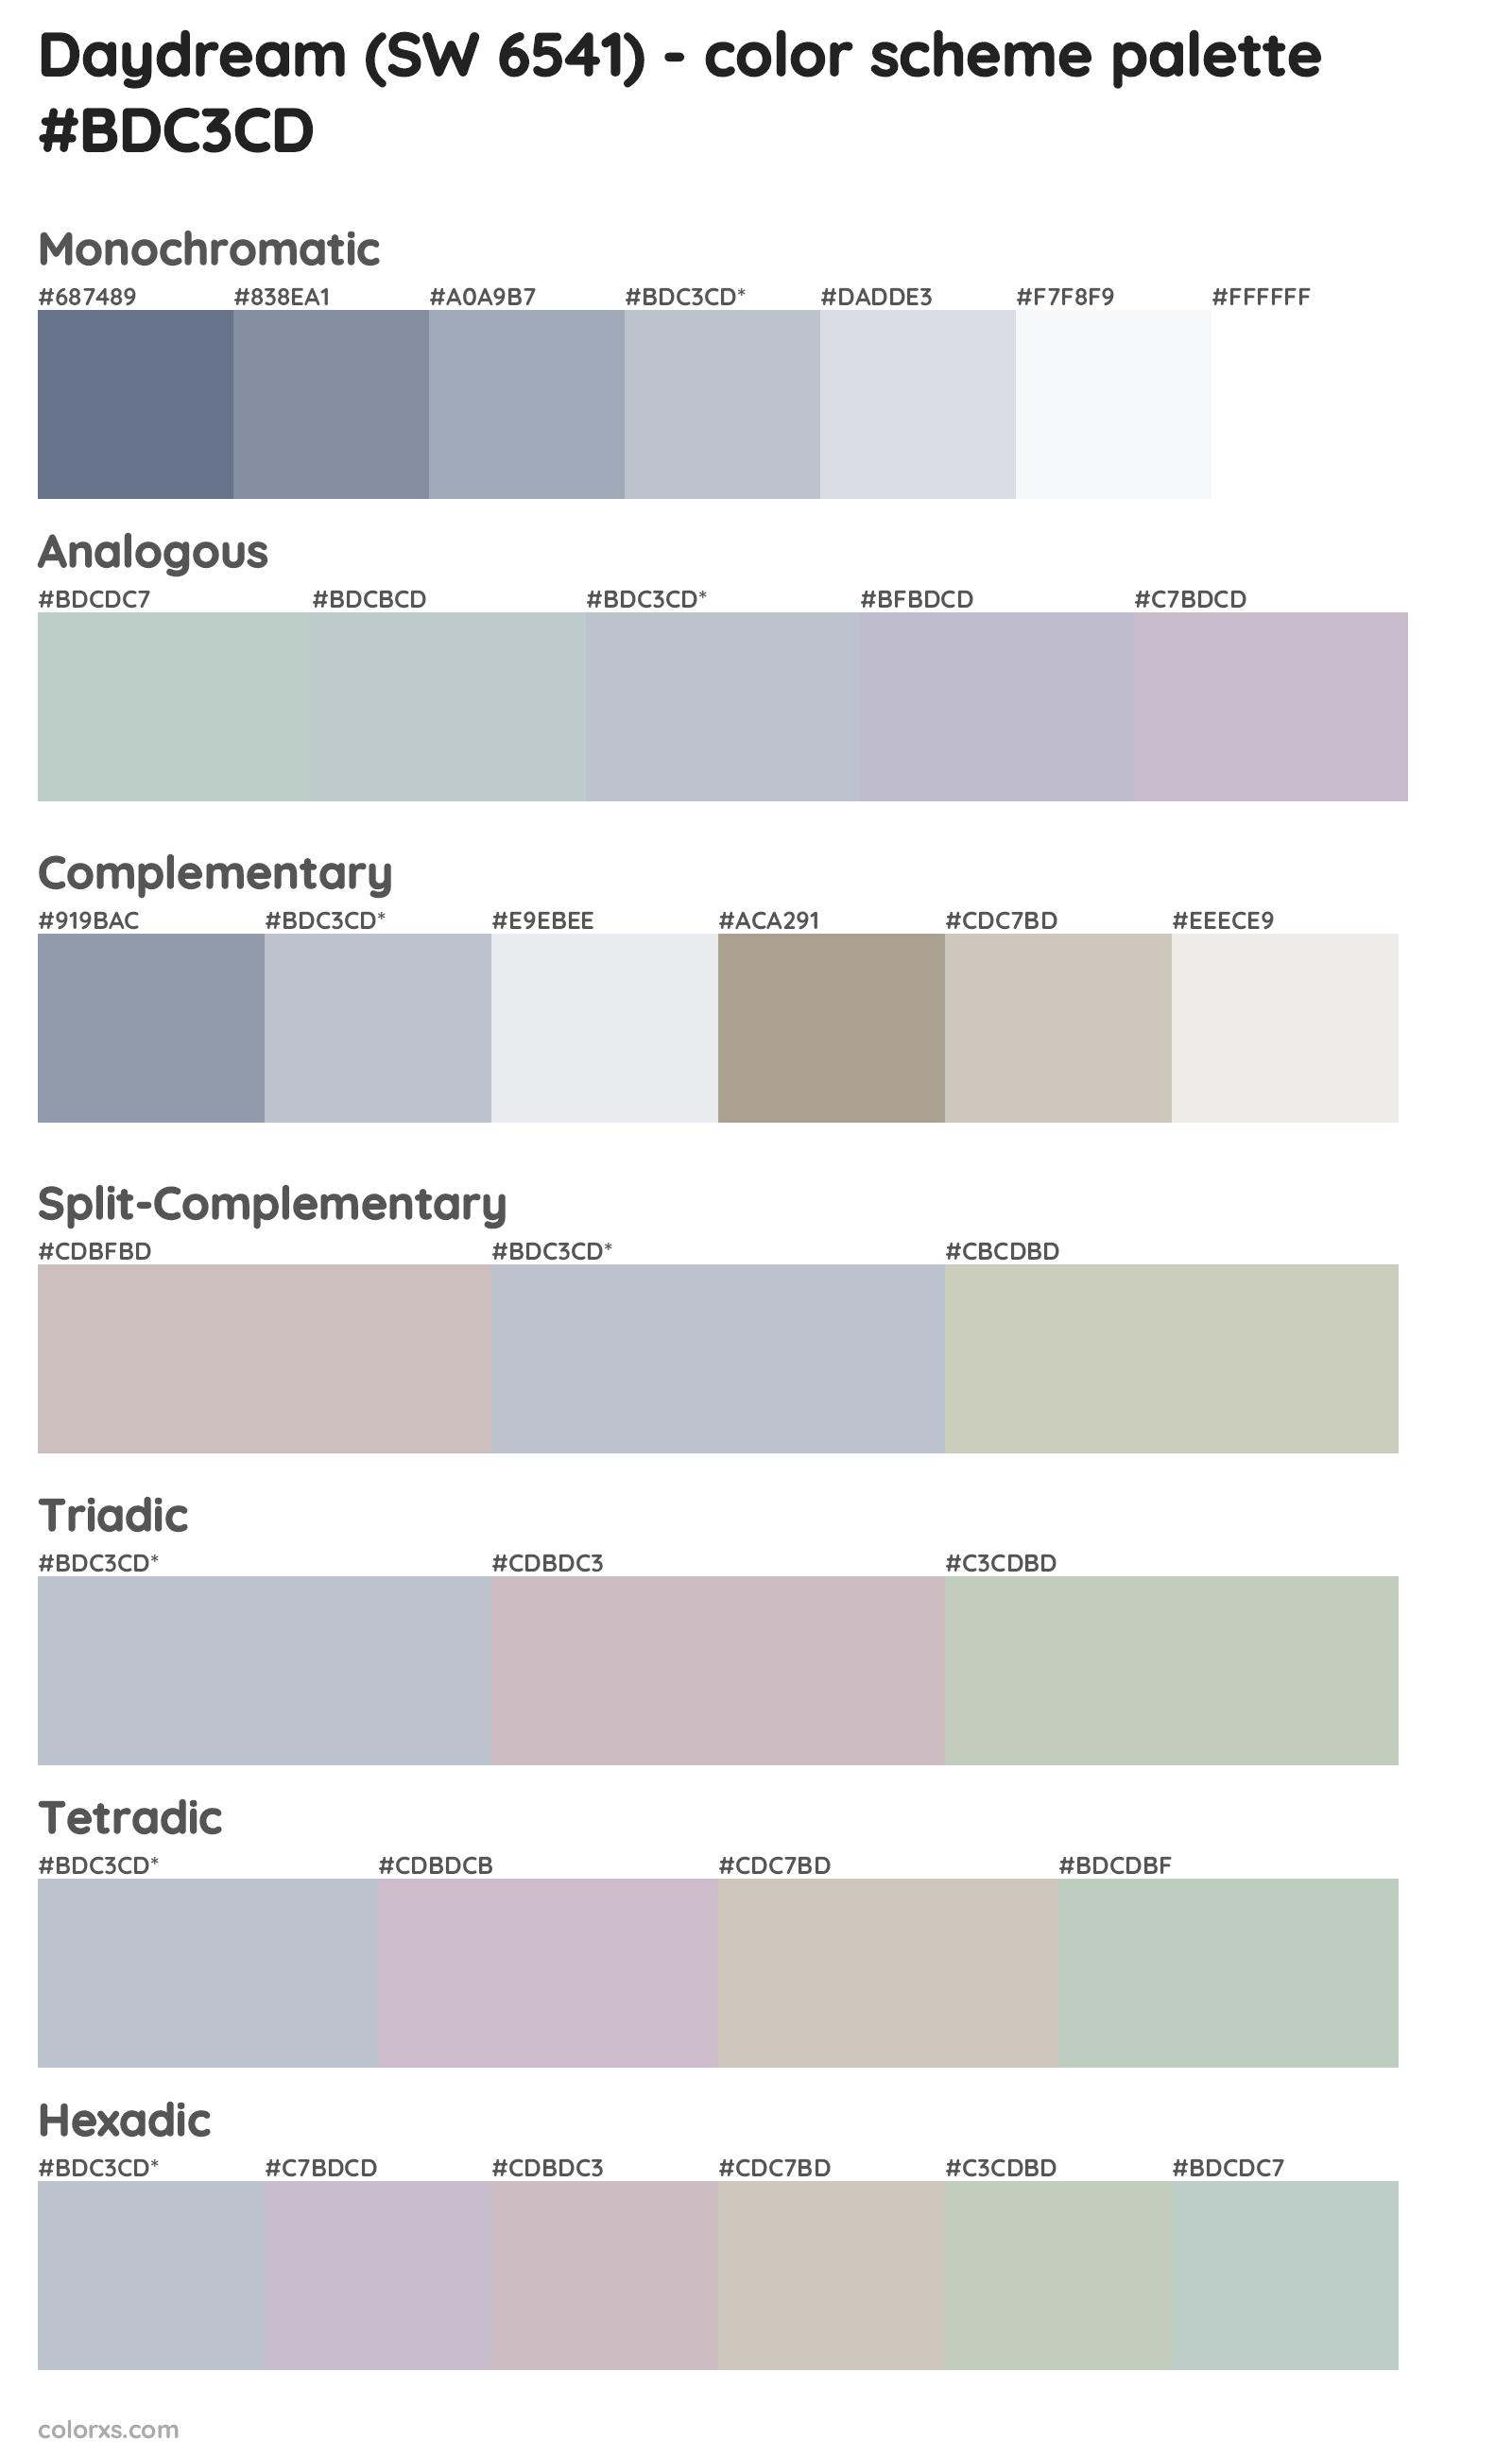 Daydream (SW 6541) Color Scheme Palettes